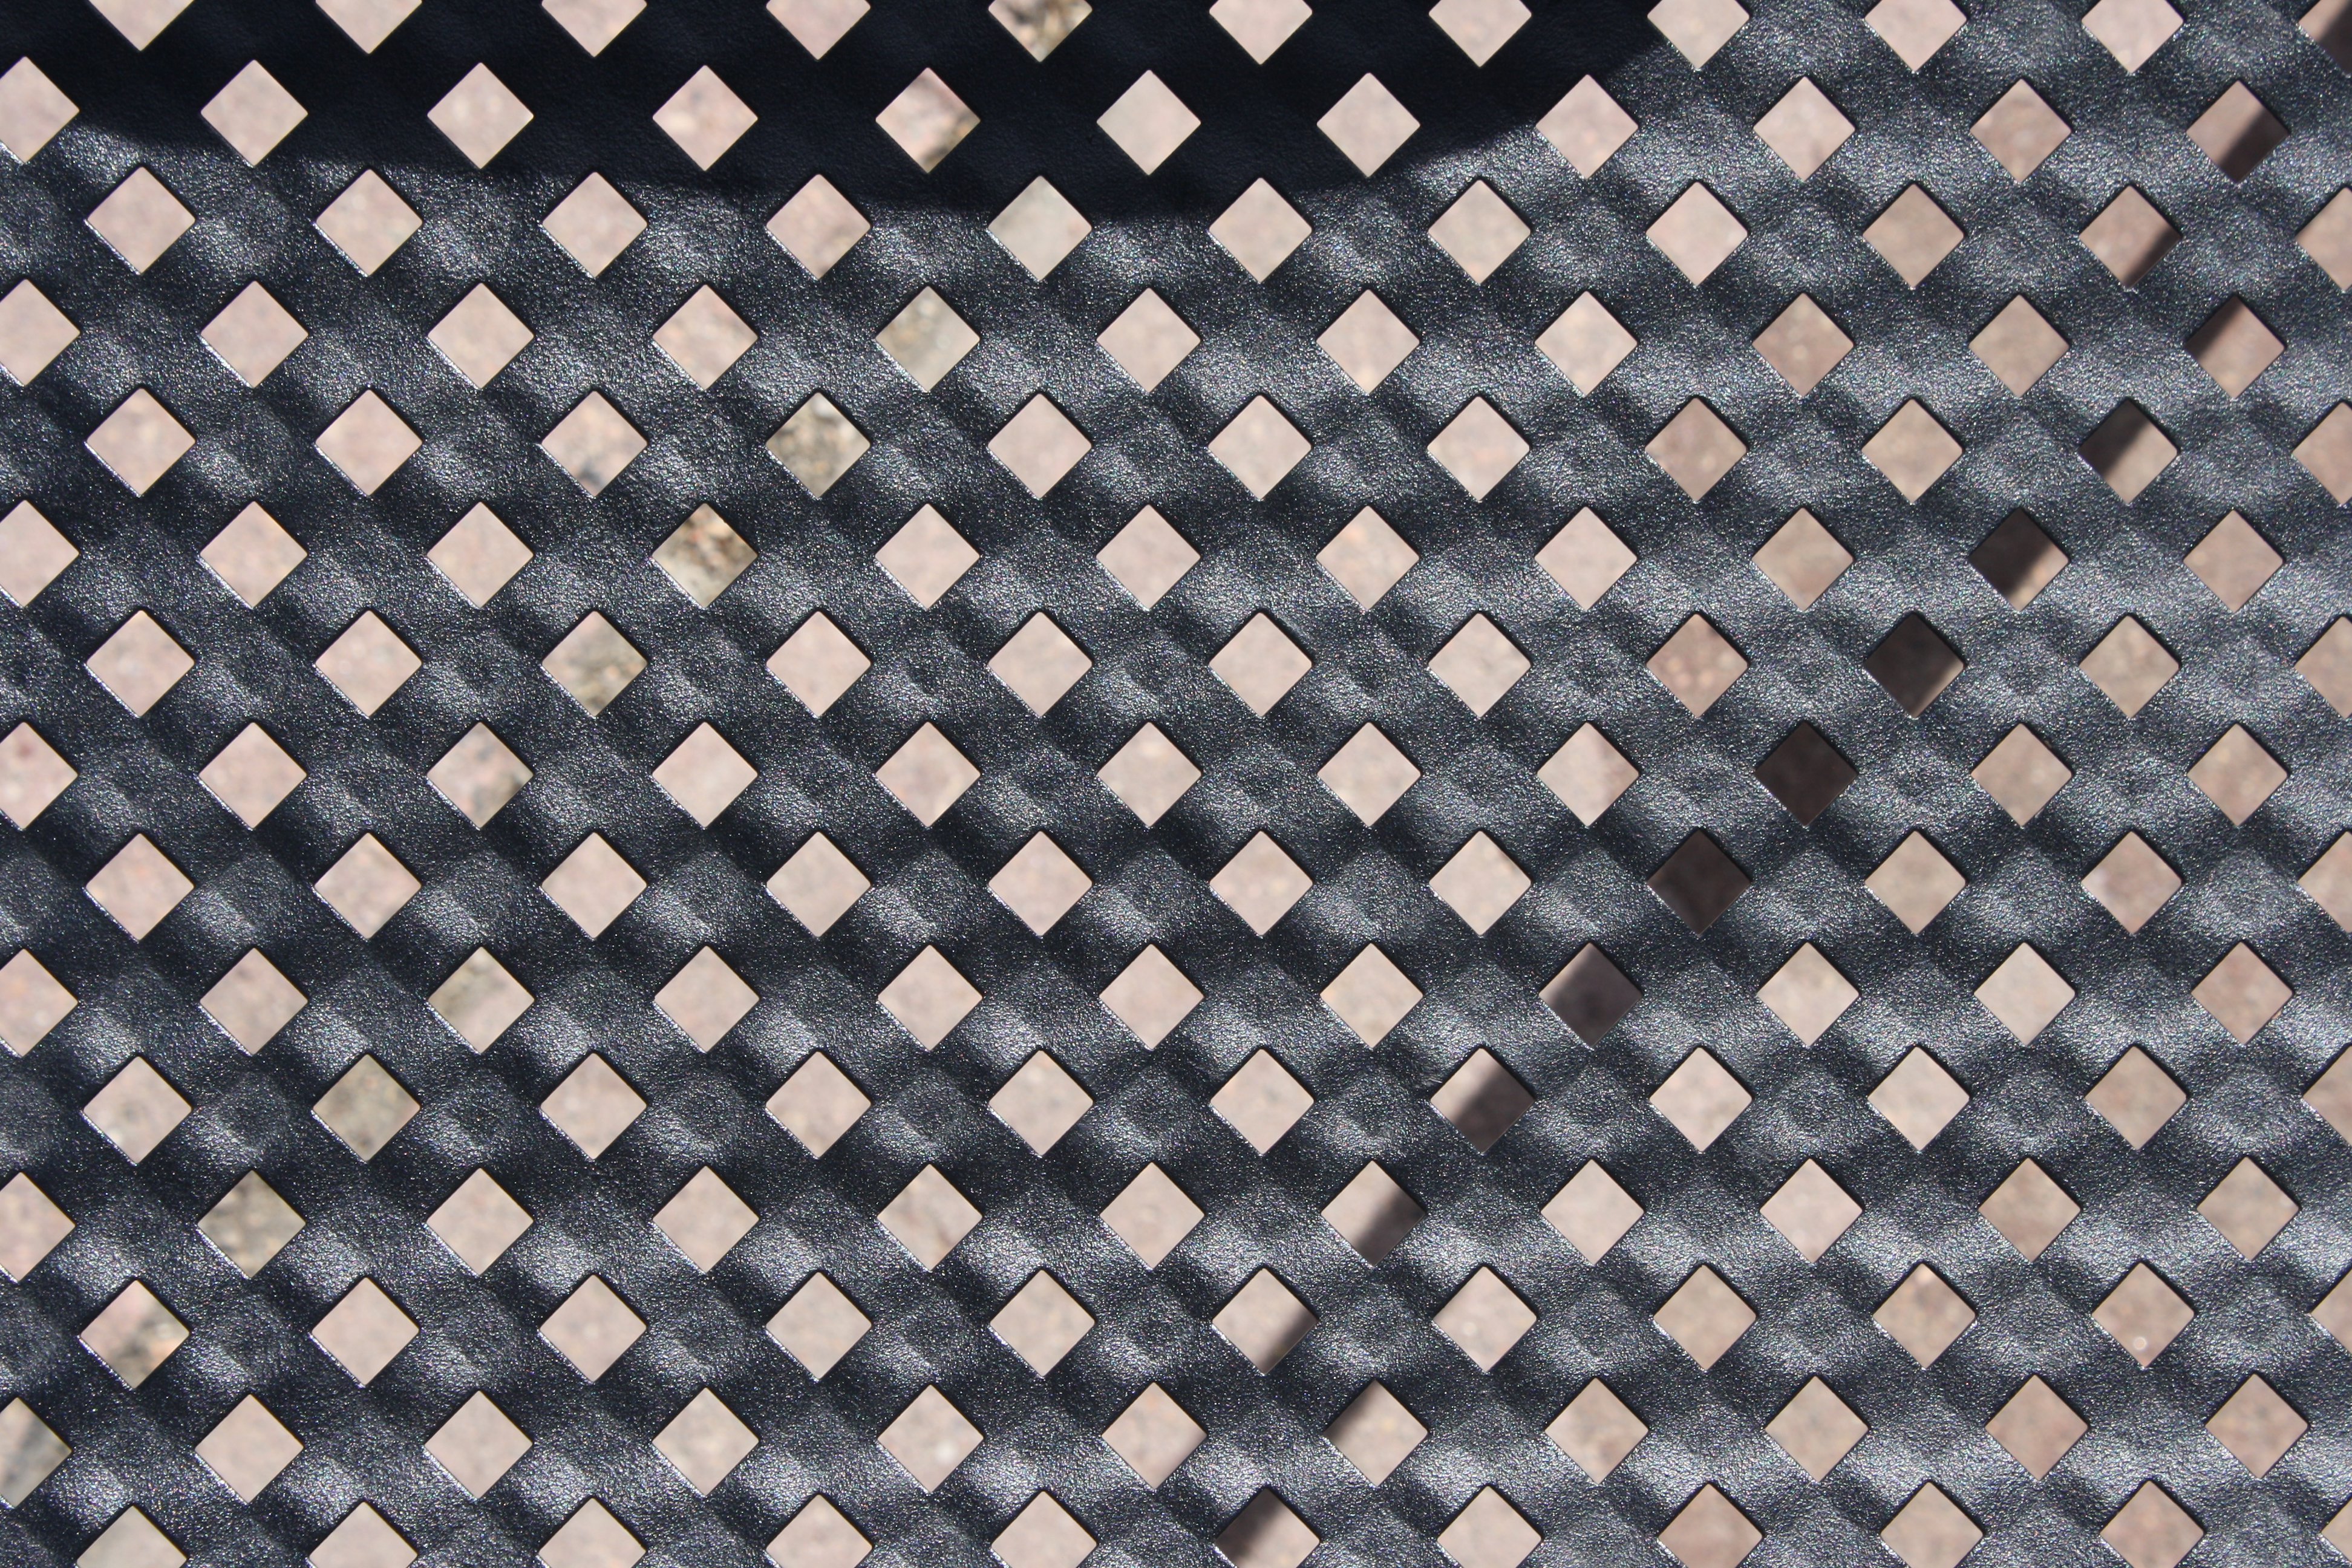 Black Metal Cross Grid Texture Picture Photograph Photos